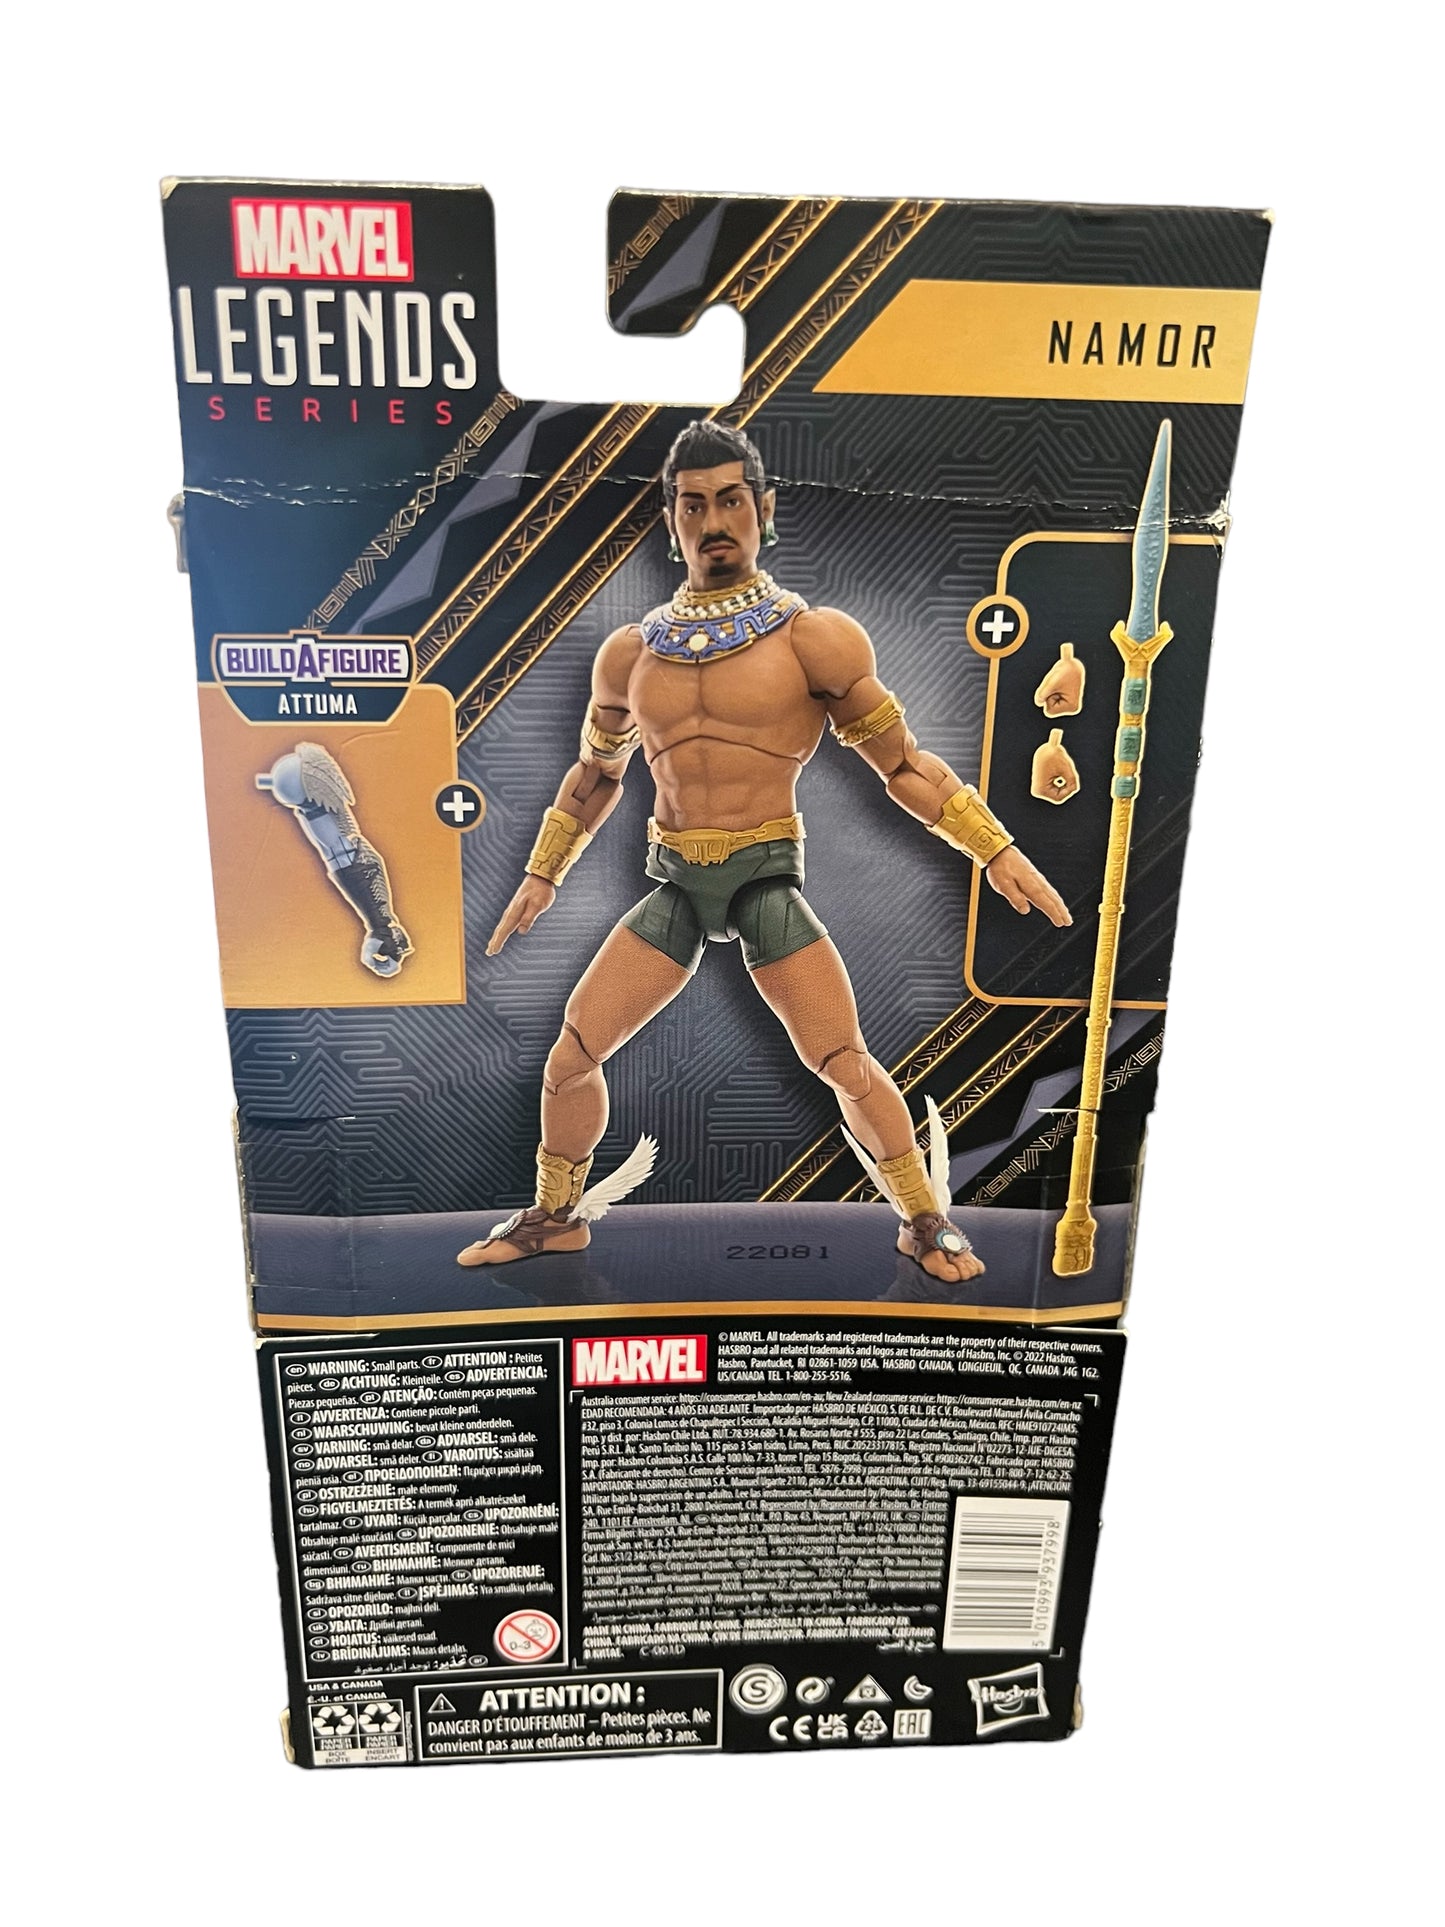 Marvel Legends Wakanda Forever Namor Build A Figure